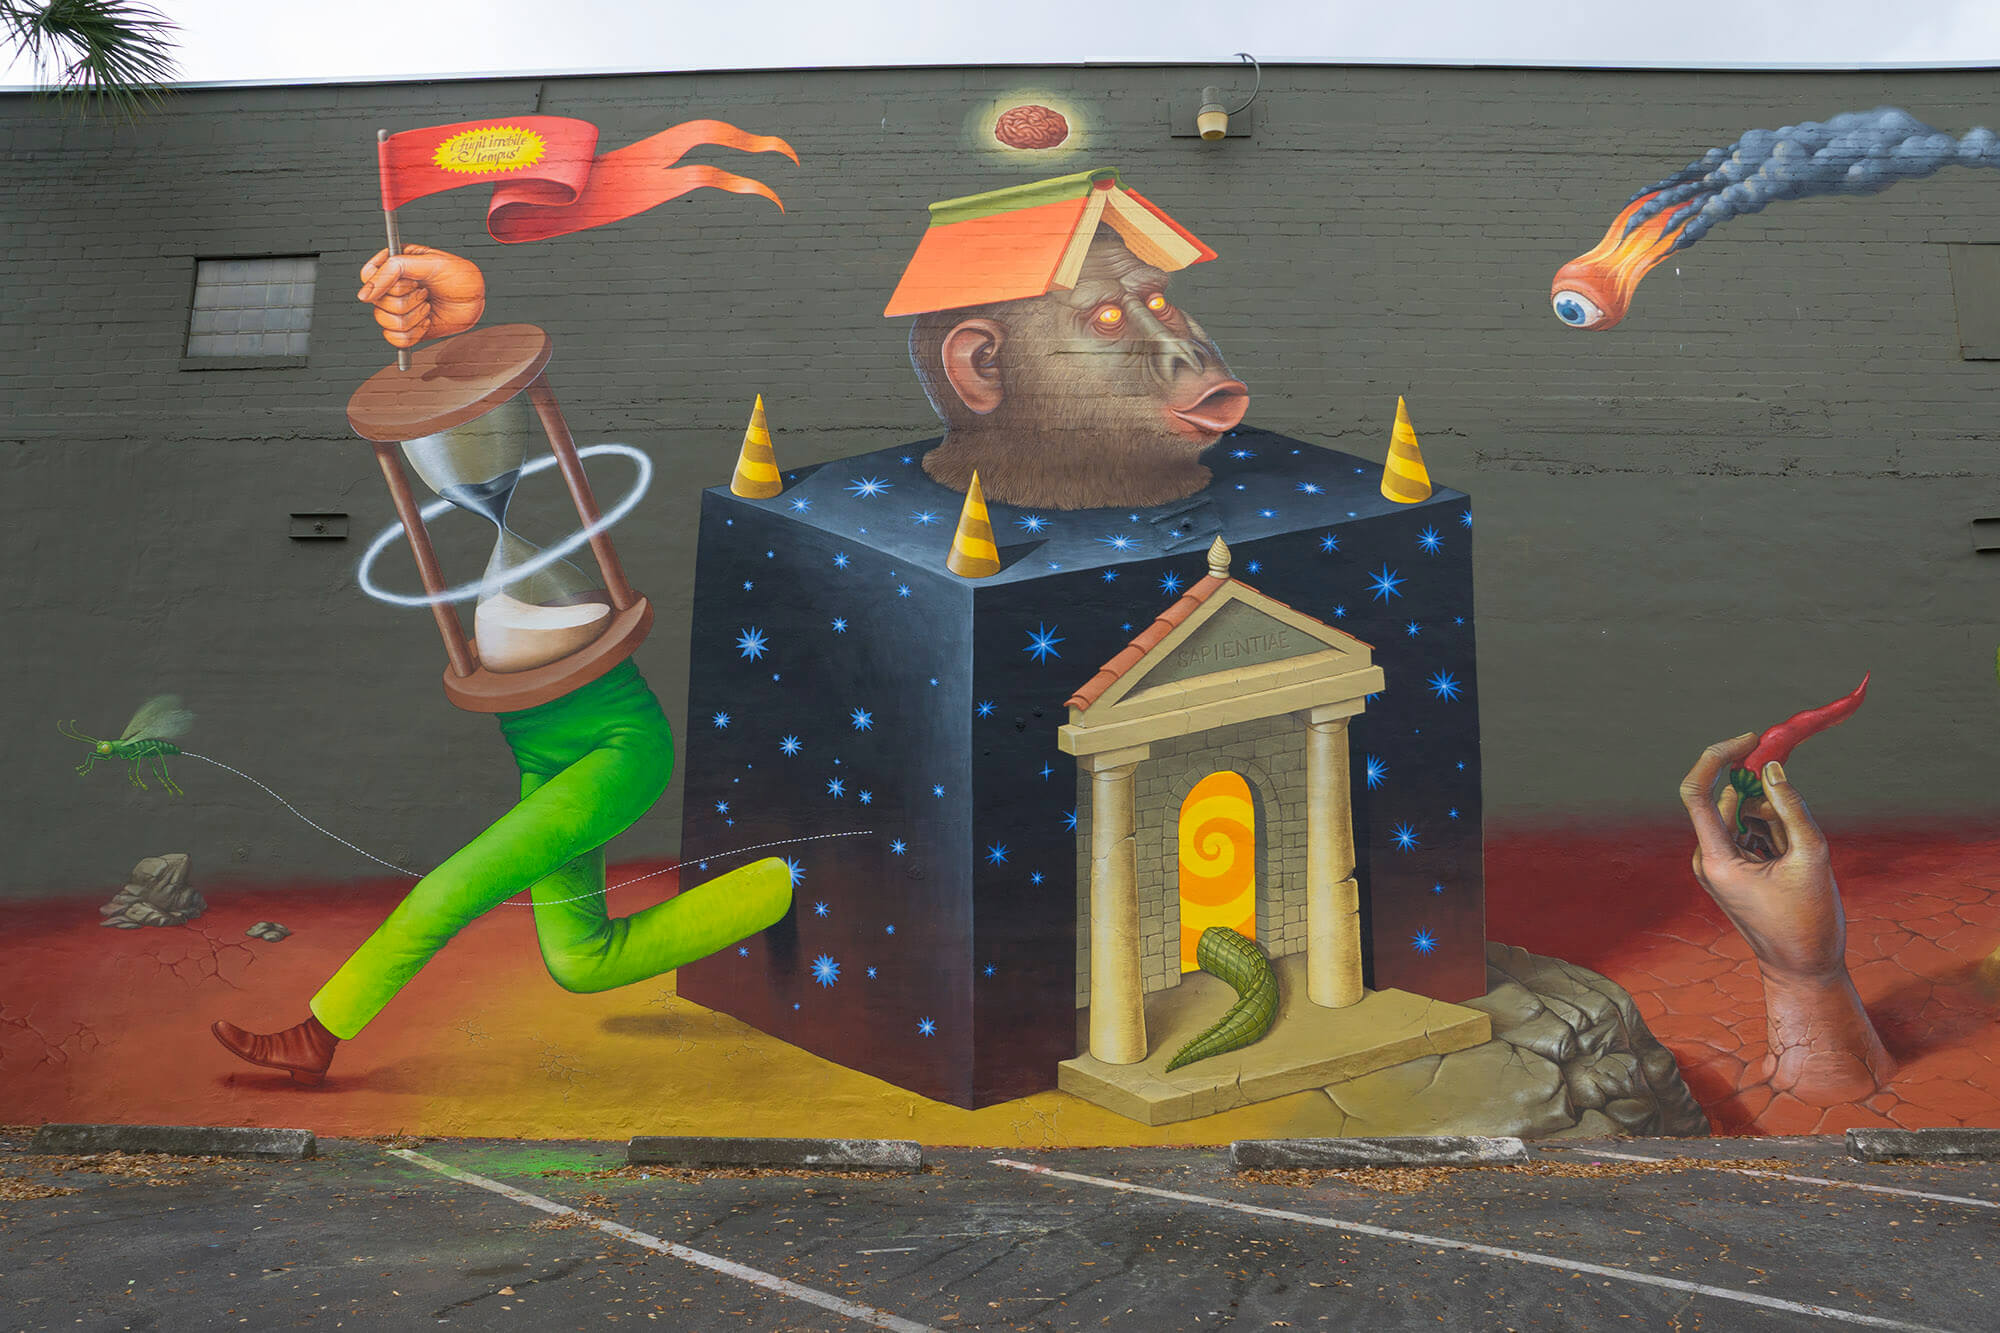 352walls, The Gainesville Urban Art Initiative, Florida